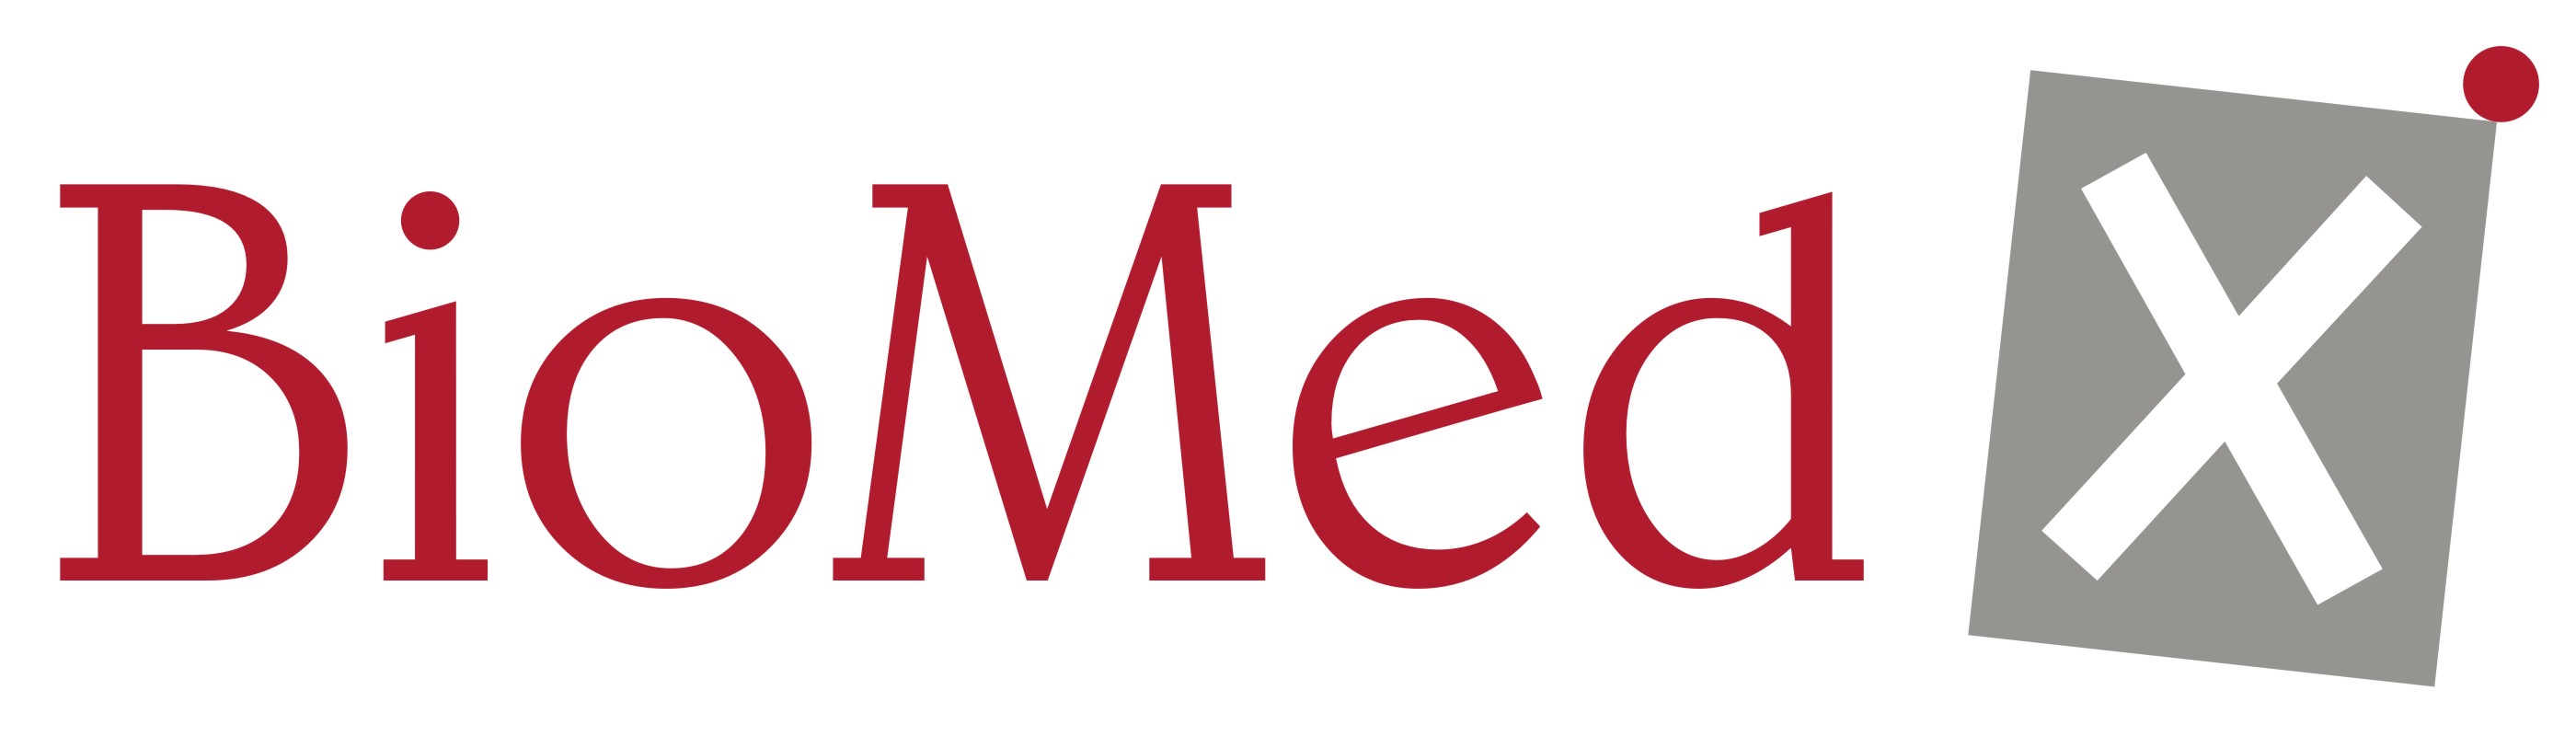 2019-03/biomedx_logo-v5-logo.jpg